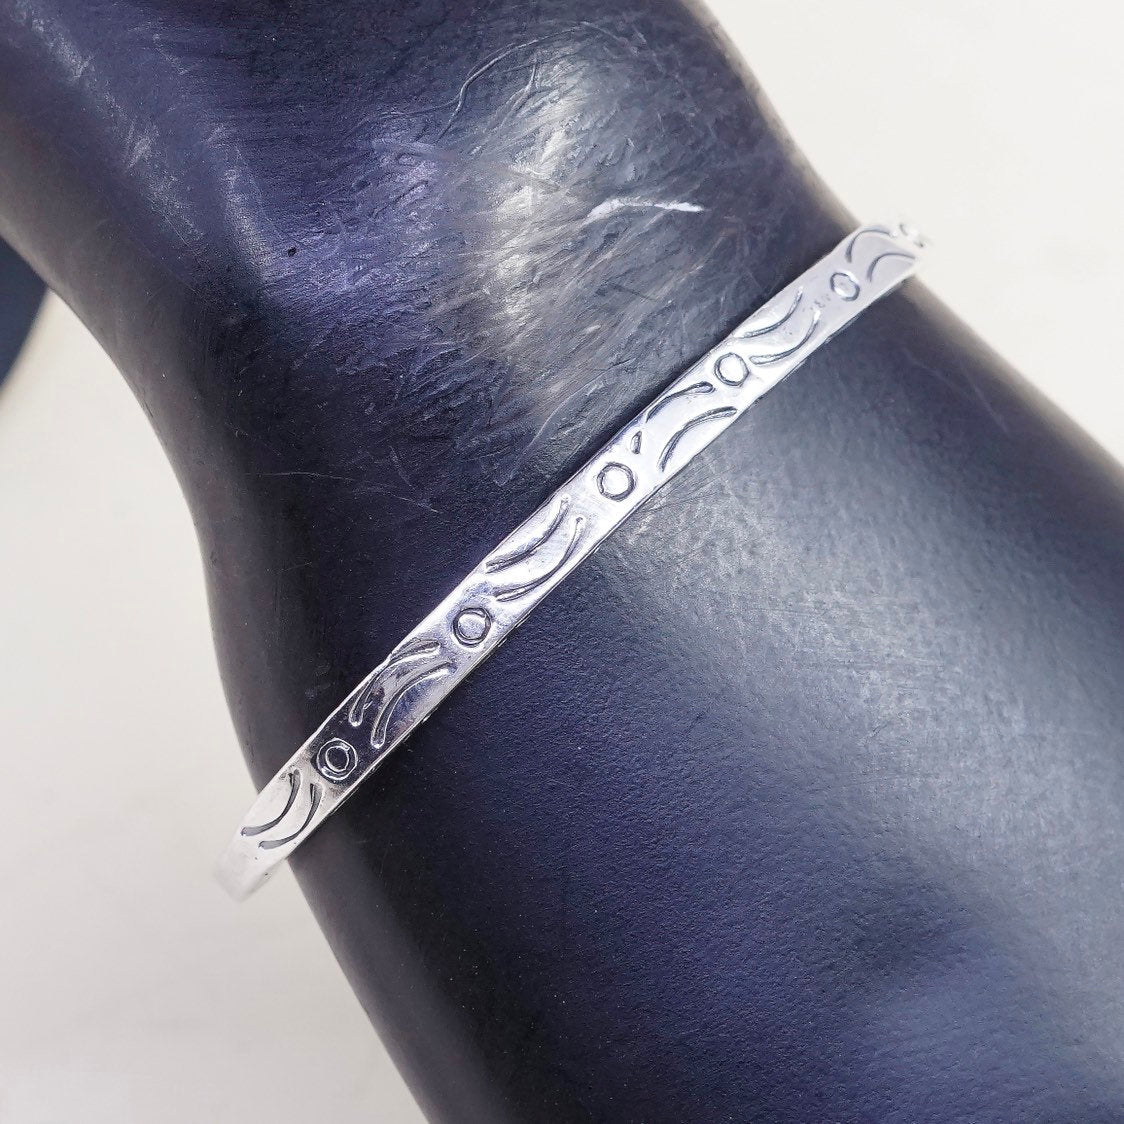 6.75", VTG Sterling silver handmade bracelet, 925 cuff w/ texture N beads end